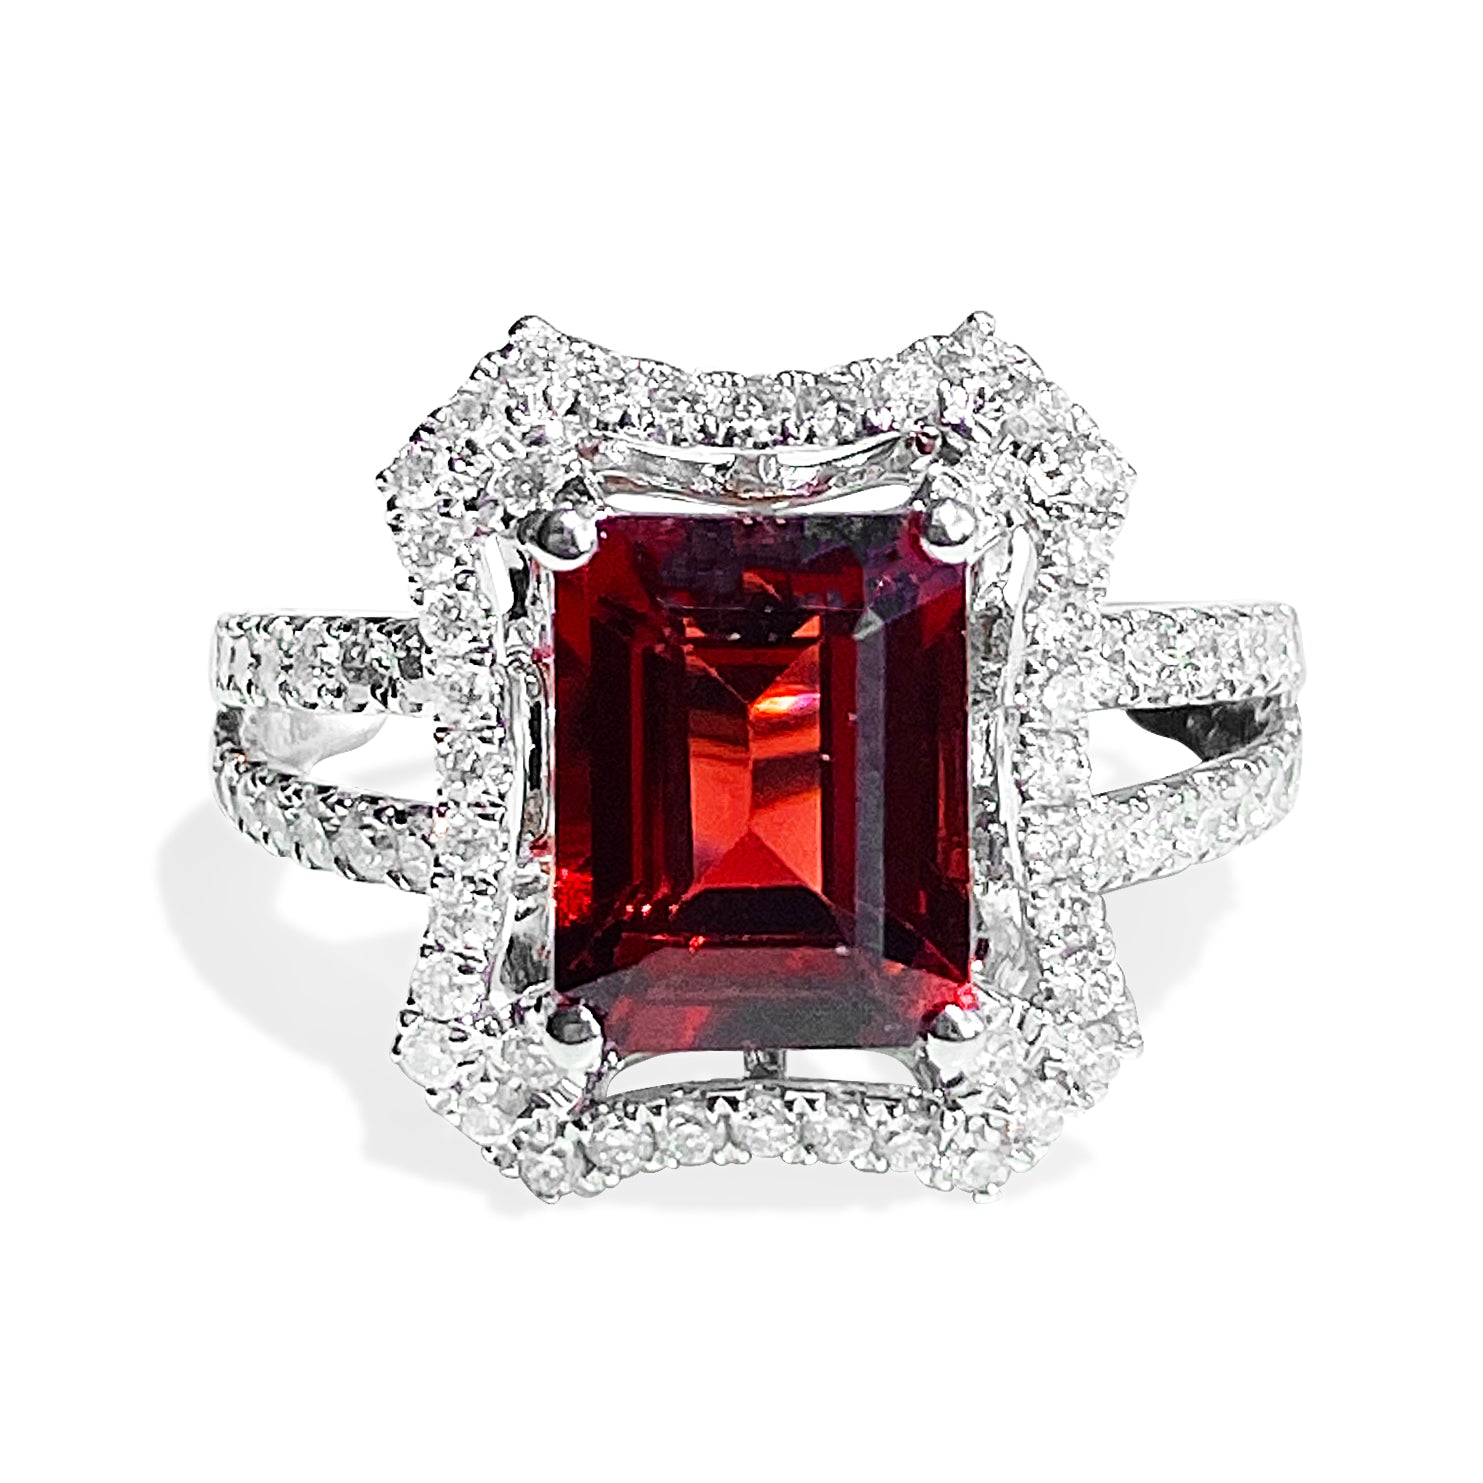 Rhodolite Garnet Ring with Diamonds